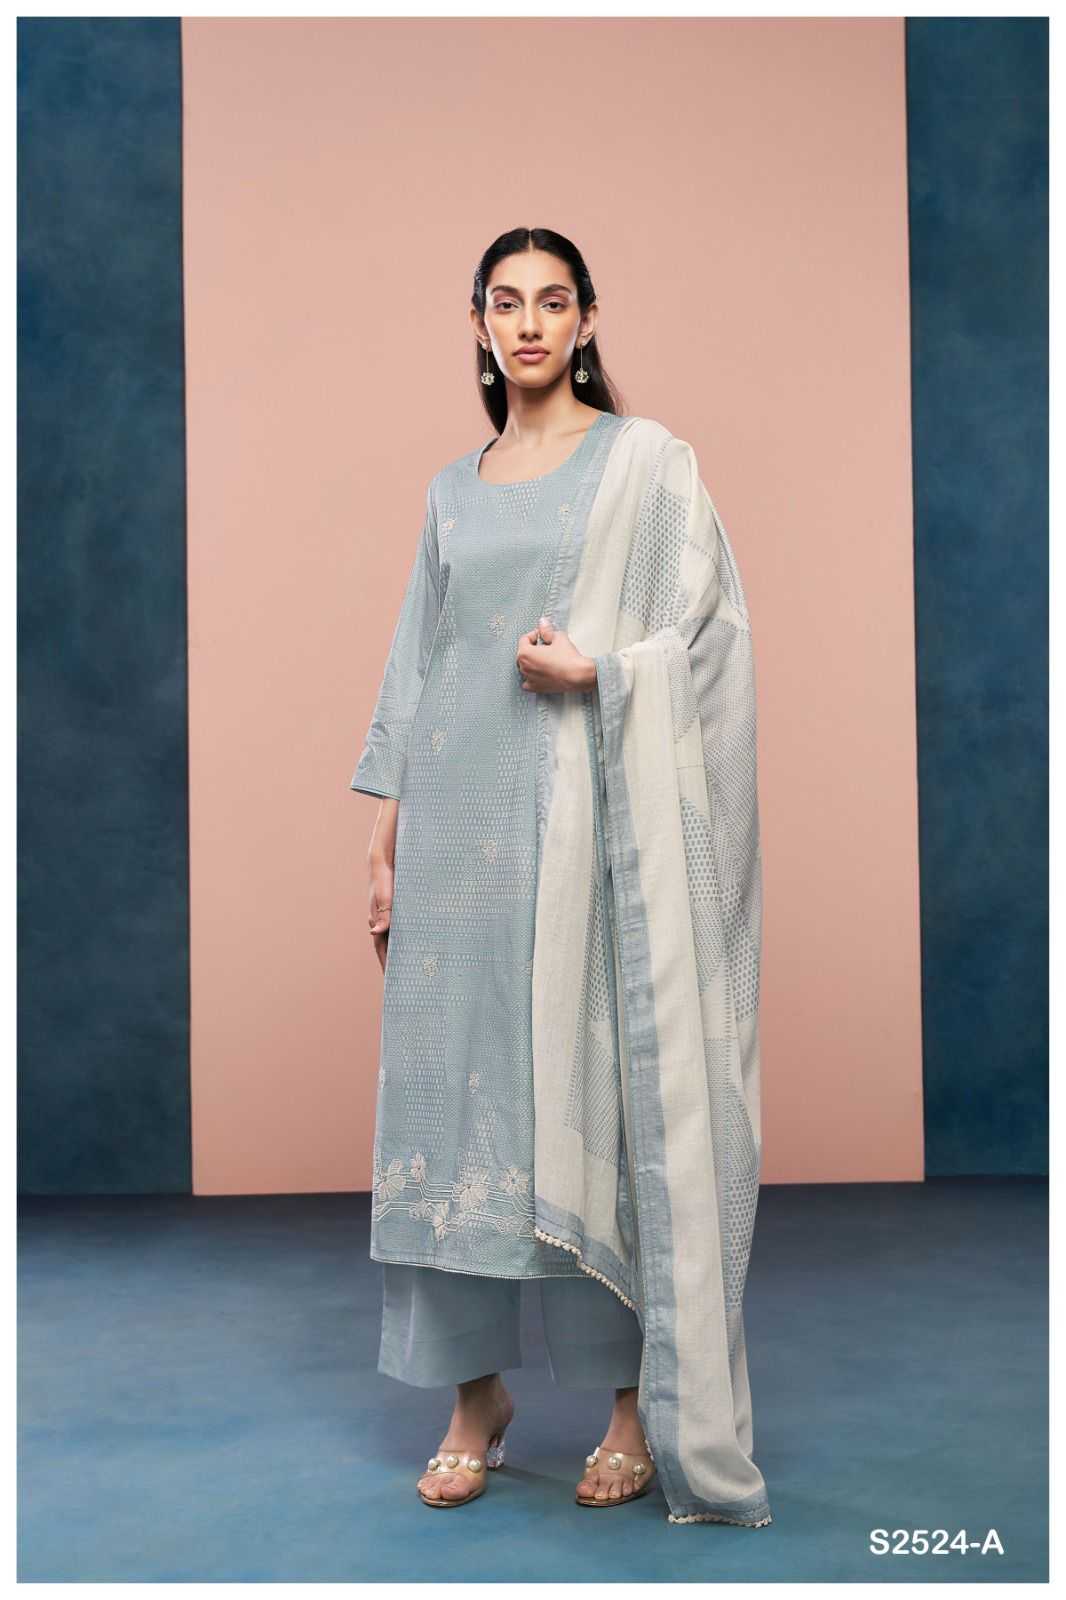 Ganga DALLYN 2524 Dress Materials Wholesale catalog